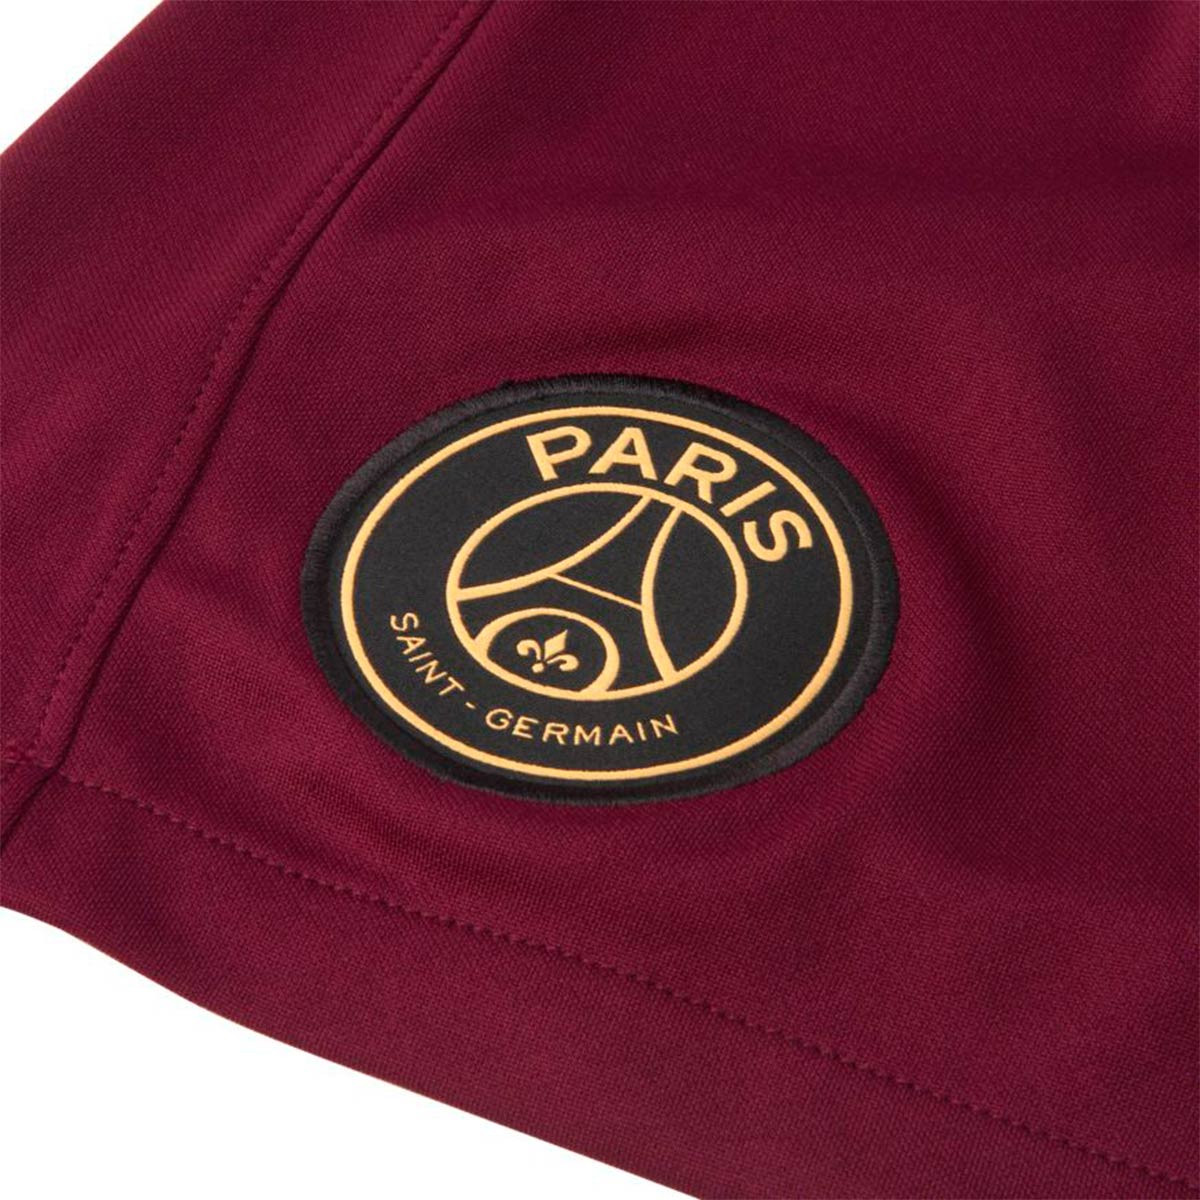 Psg 3Rd Kit 2021 / Paris Saint Germain Dls Kits 2021 Dream League